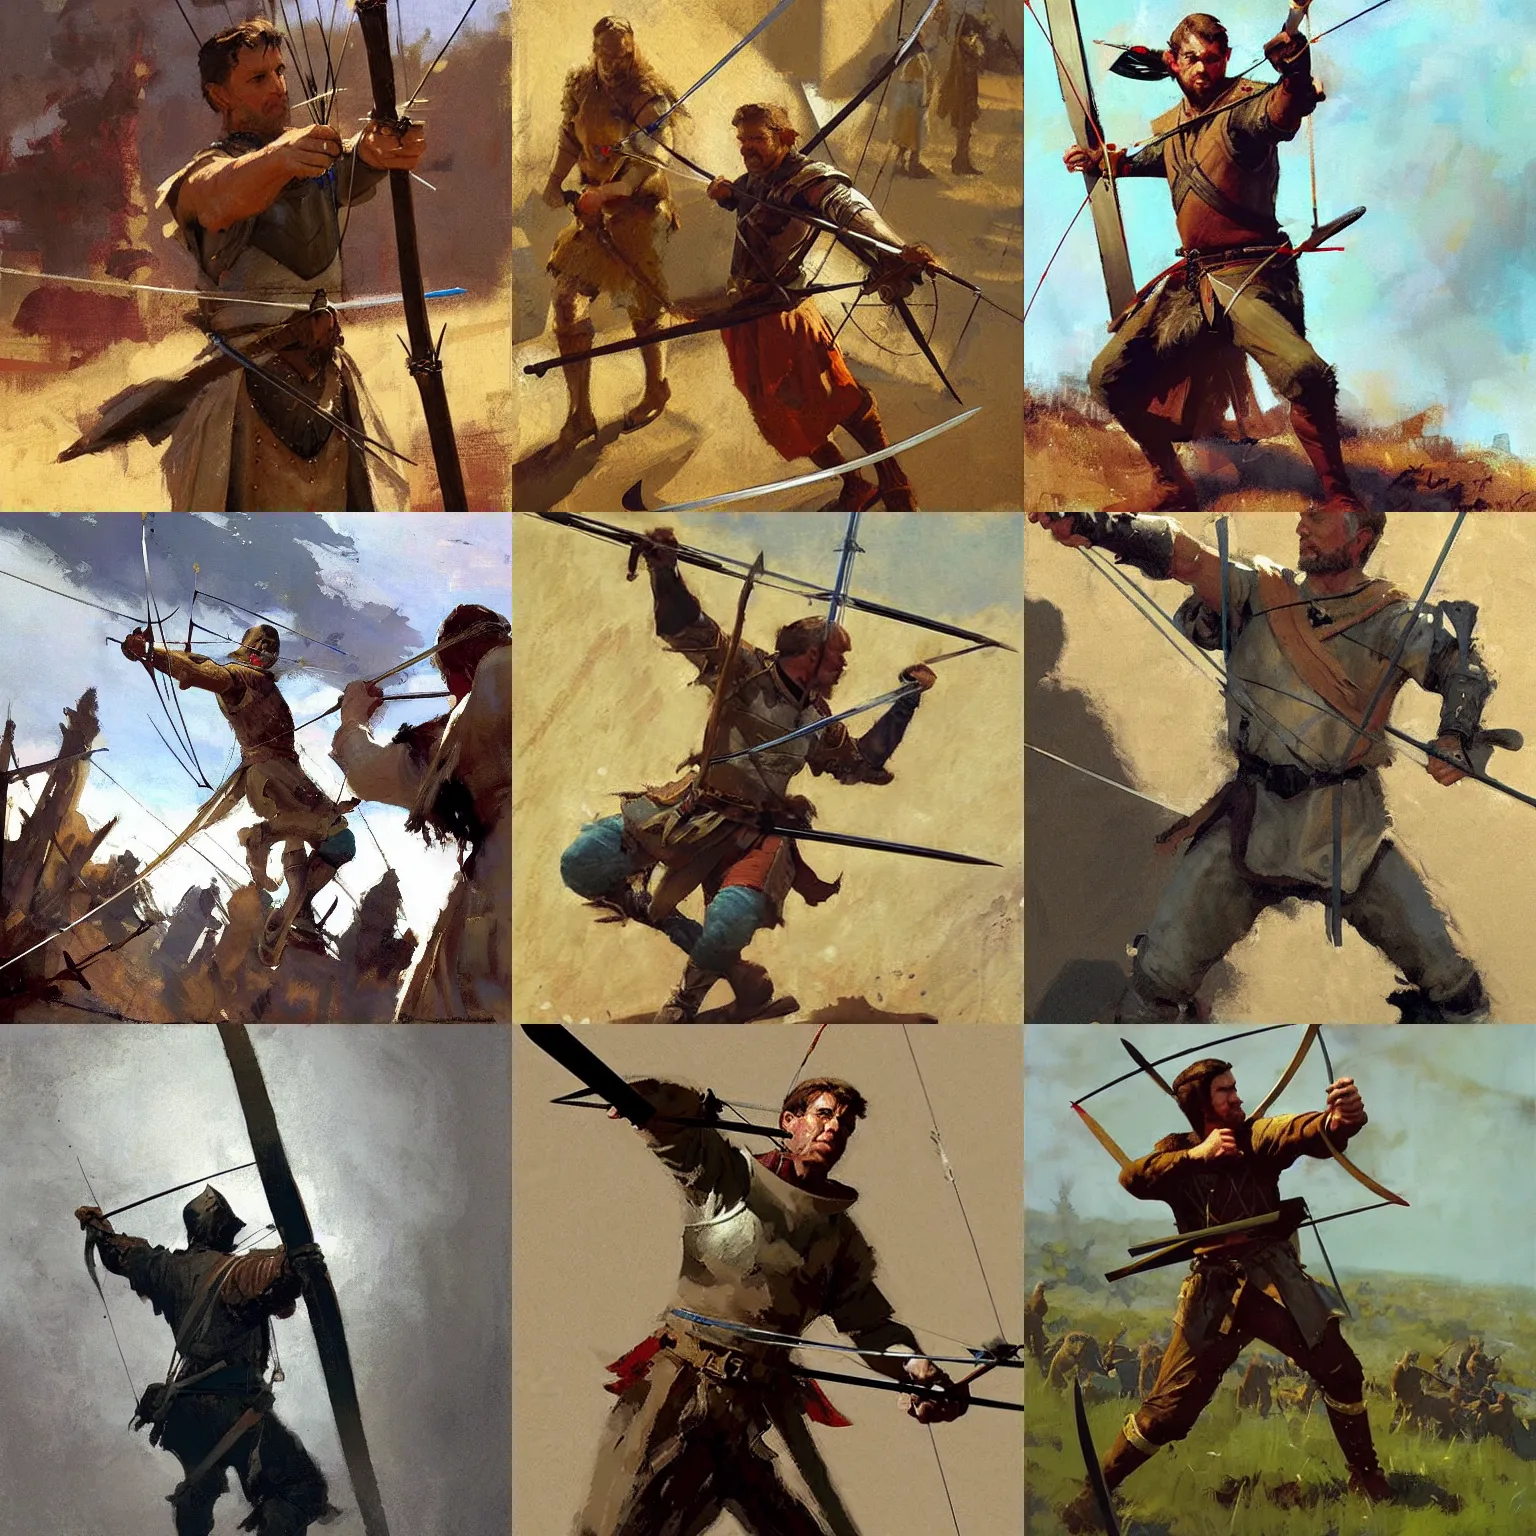 Prompt: medieval archer posing by craig mullins, greg manchess, bernie fuchs, walter everett, epic